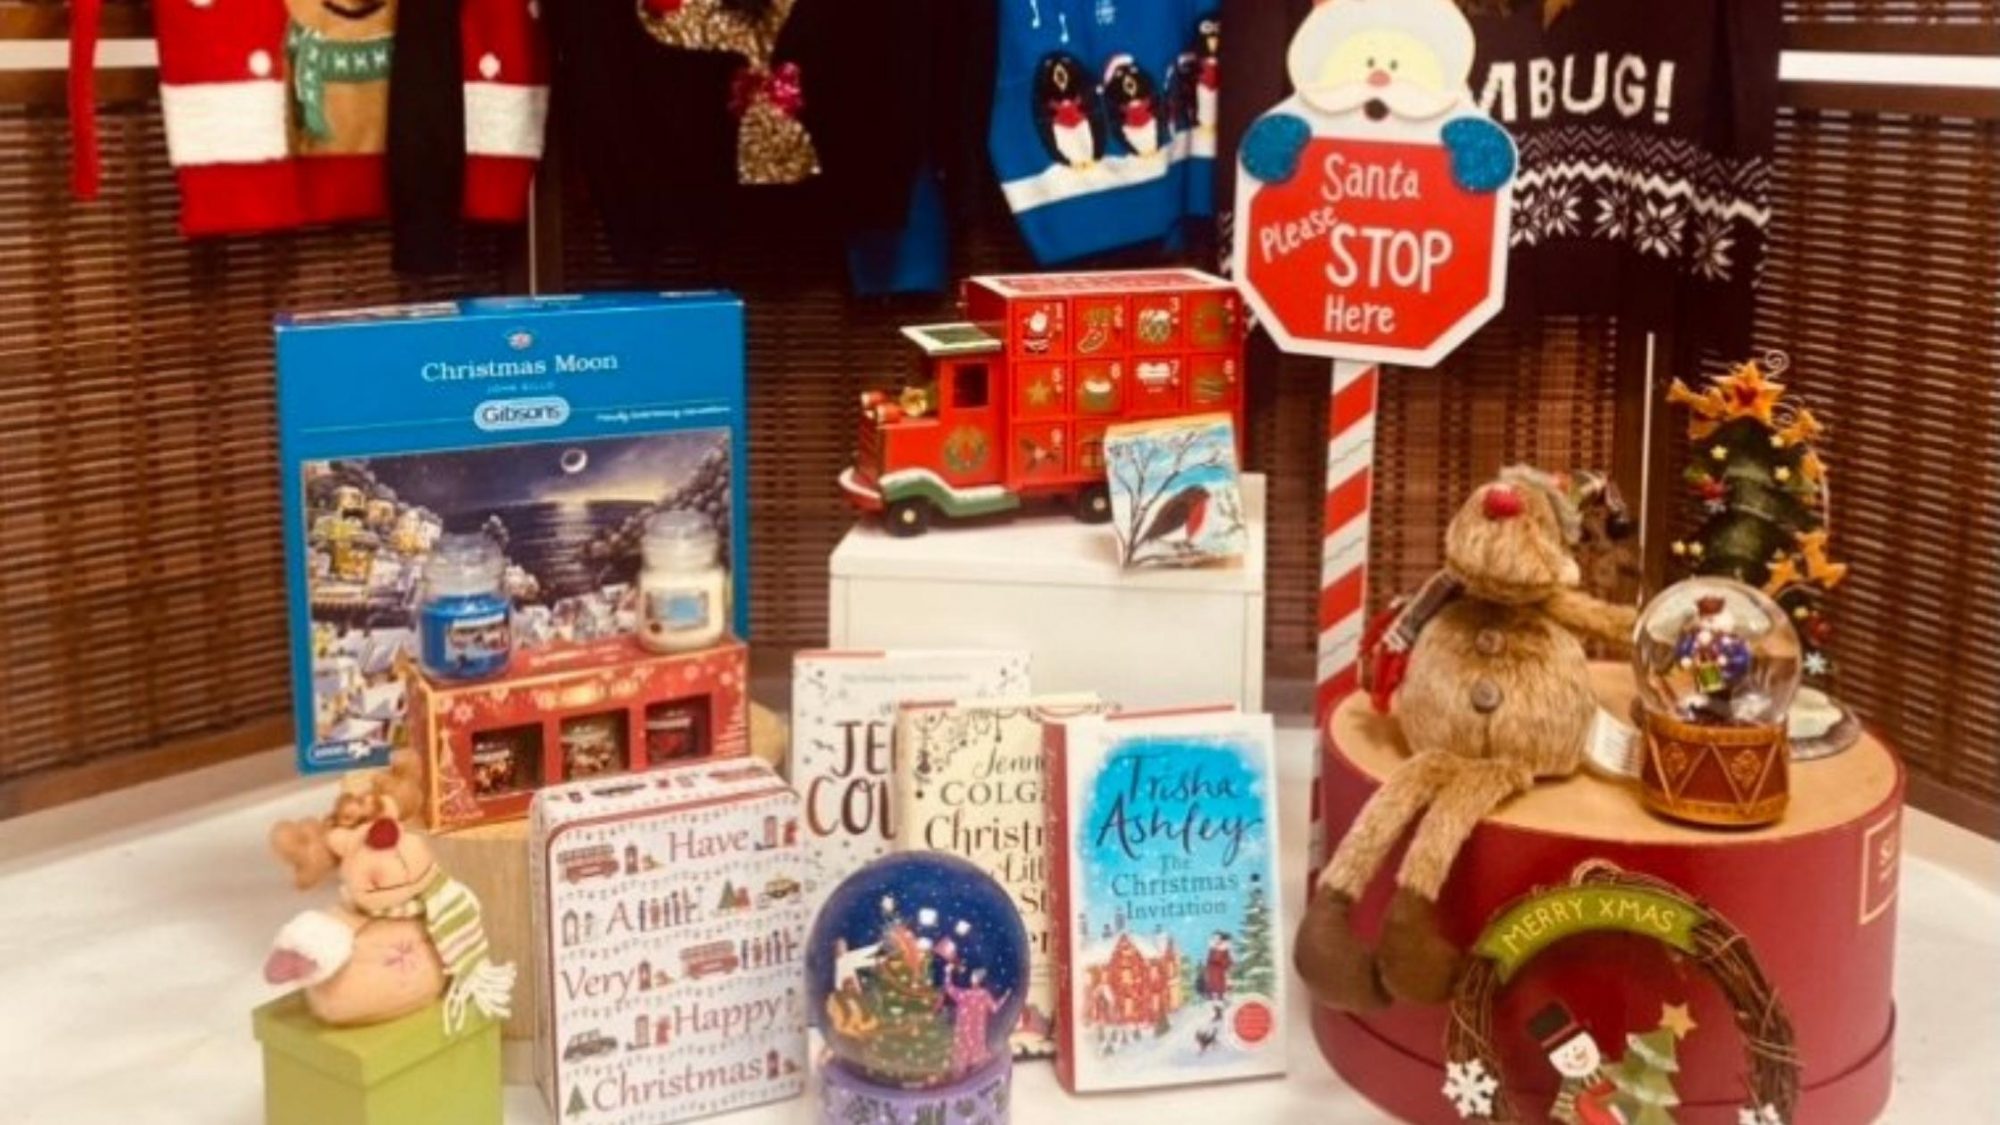 A display of Christmas themed goods.